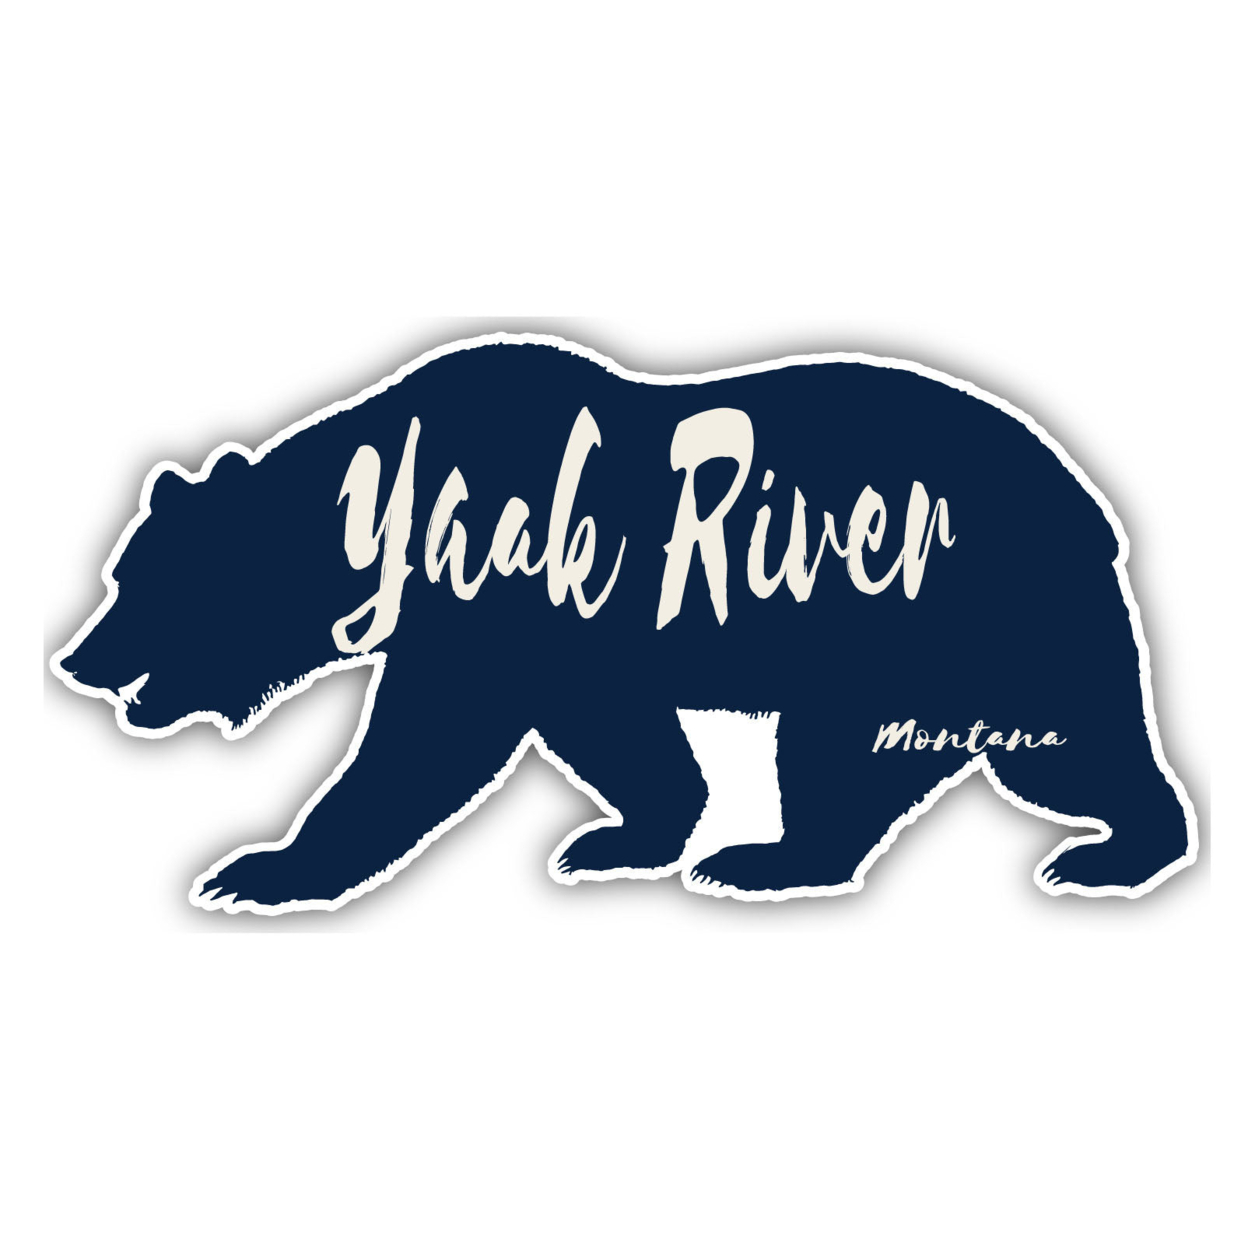 Yaak River Montana Souvenir Decorative Stickers (Choose Theme And Size) - Single Unit, 2-Inch, Bear